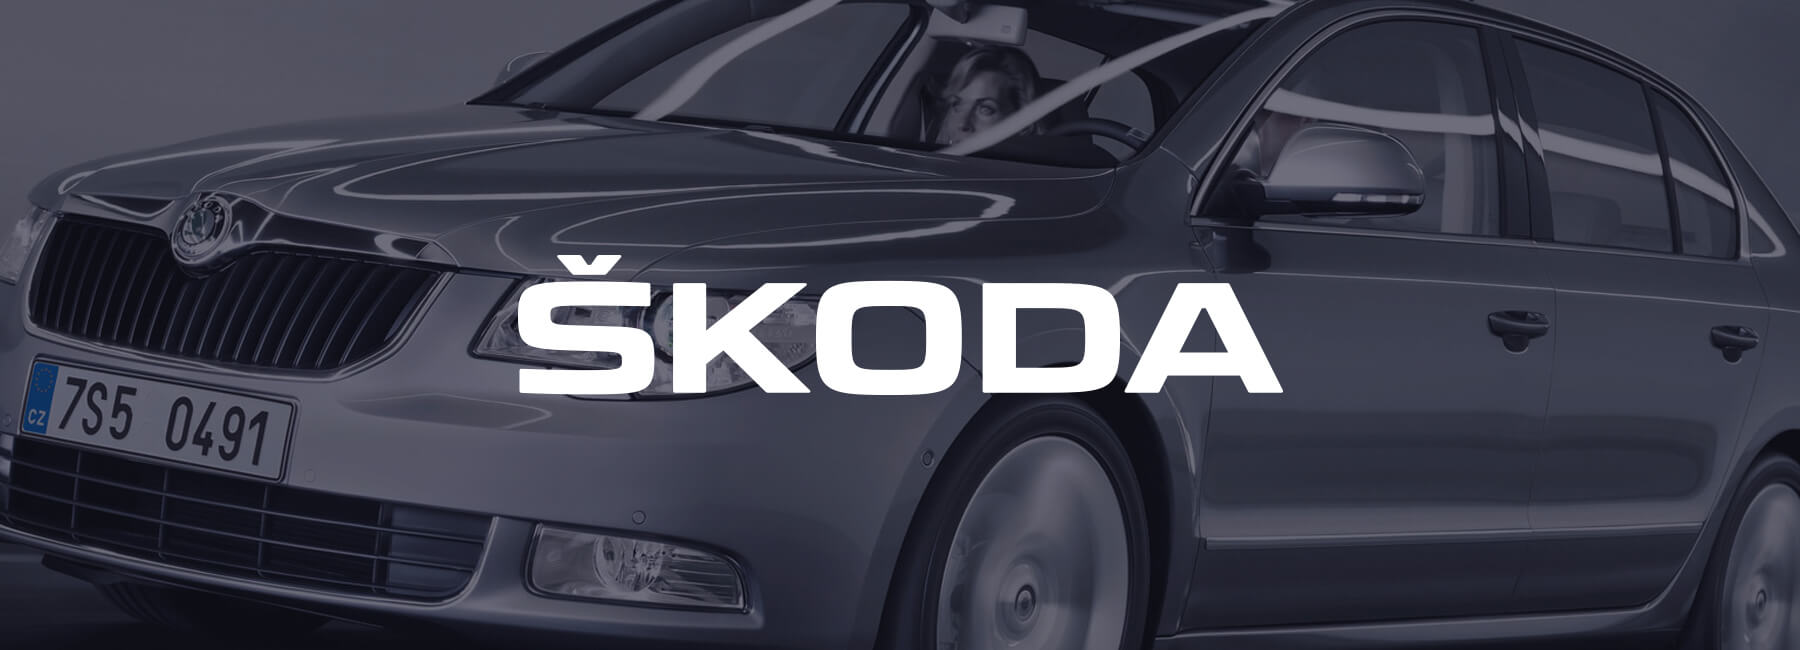 Skoda: Optimising Overall User Experience